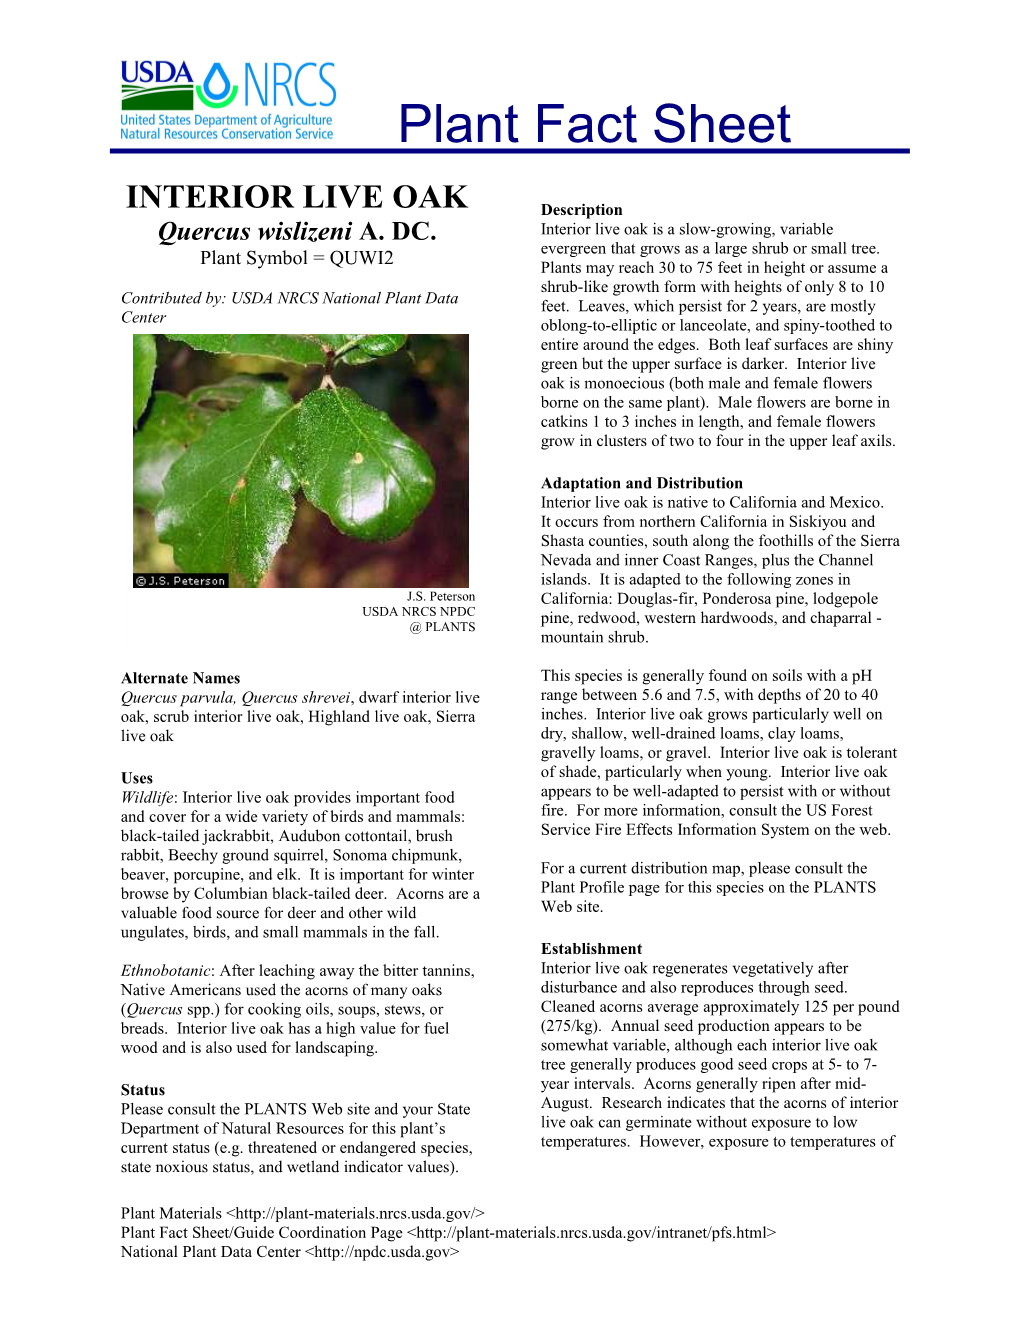 Interior Live Oak s1